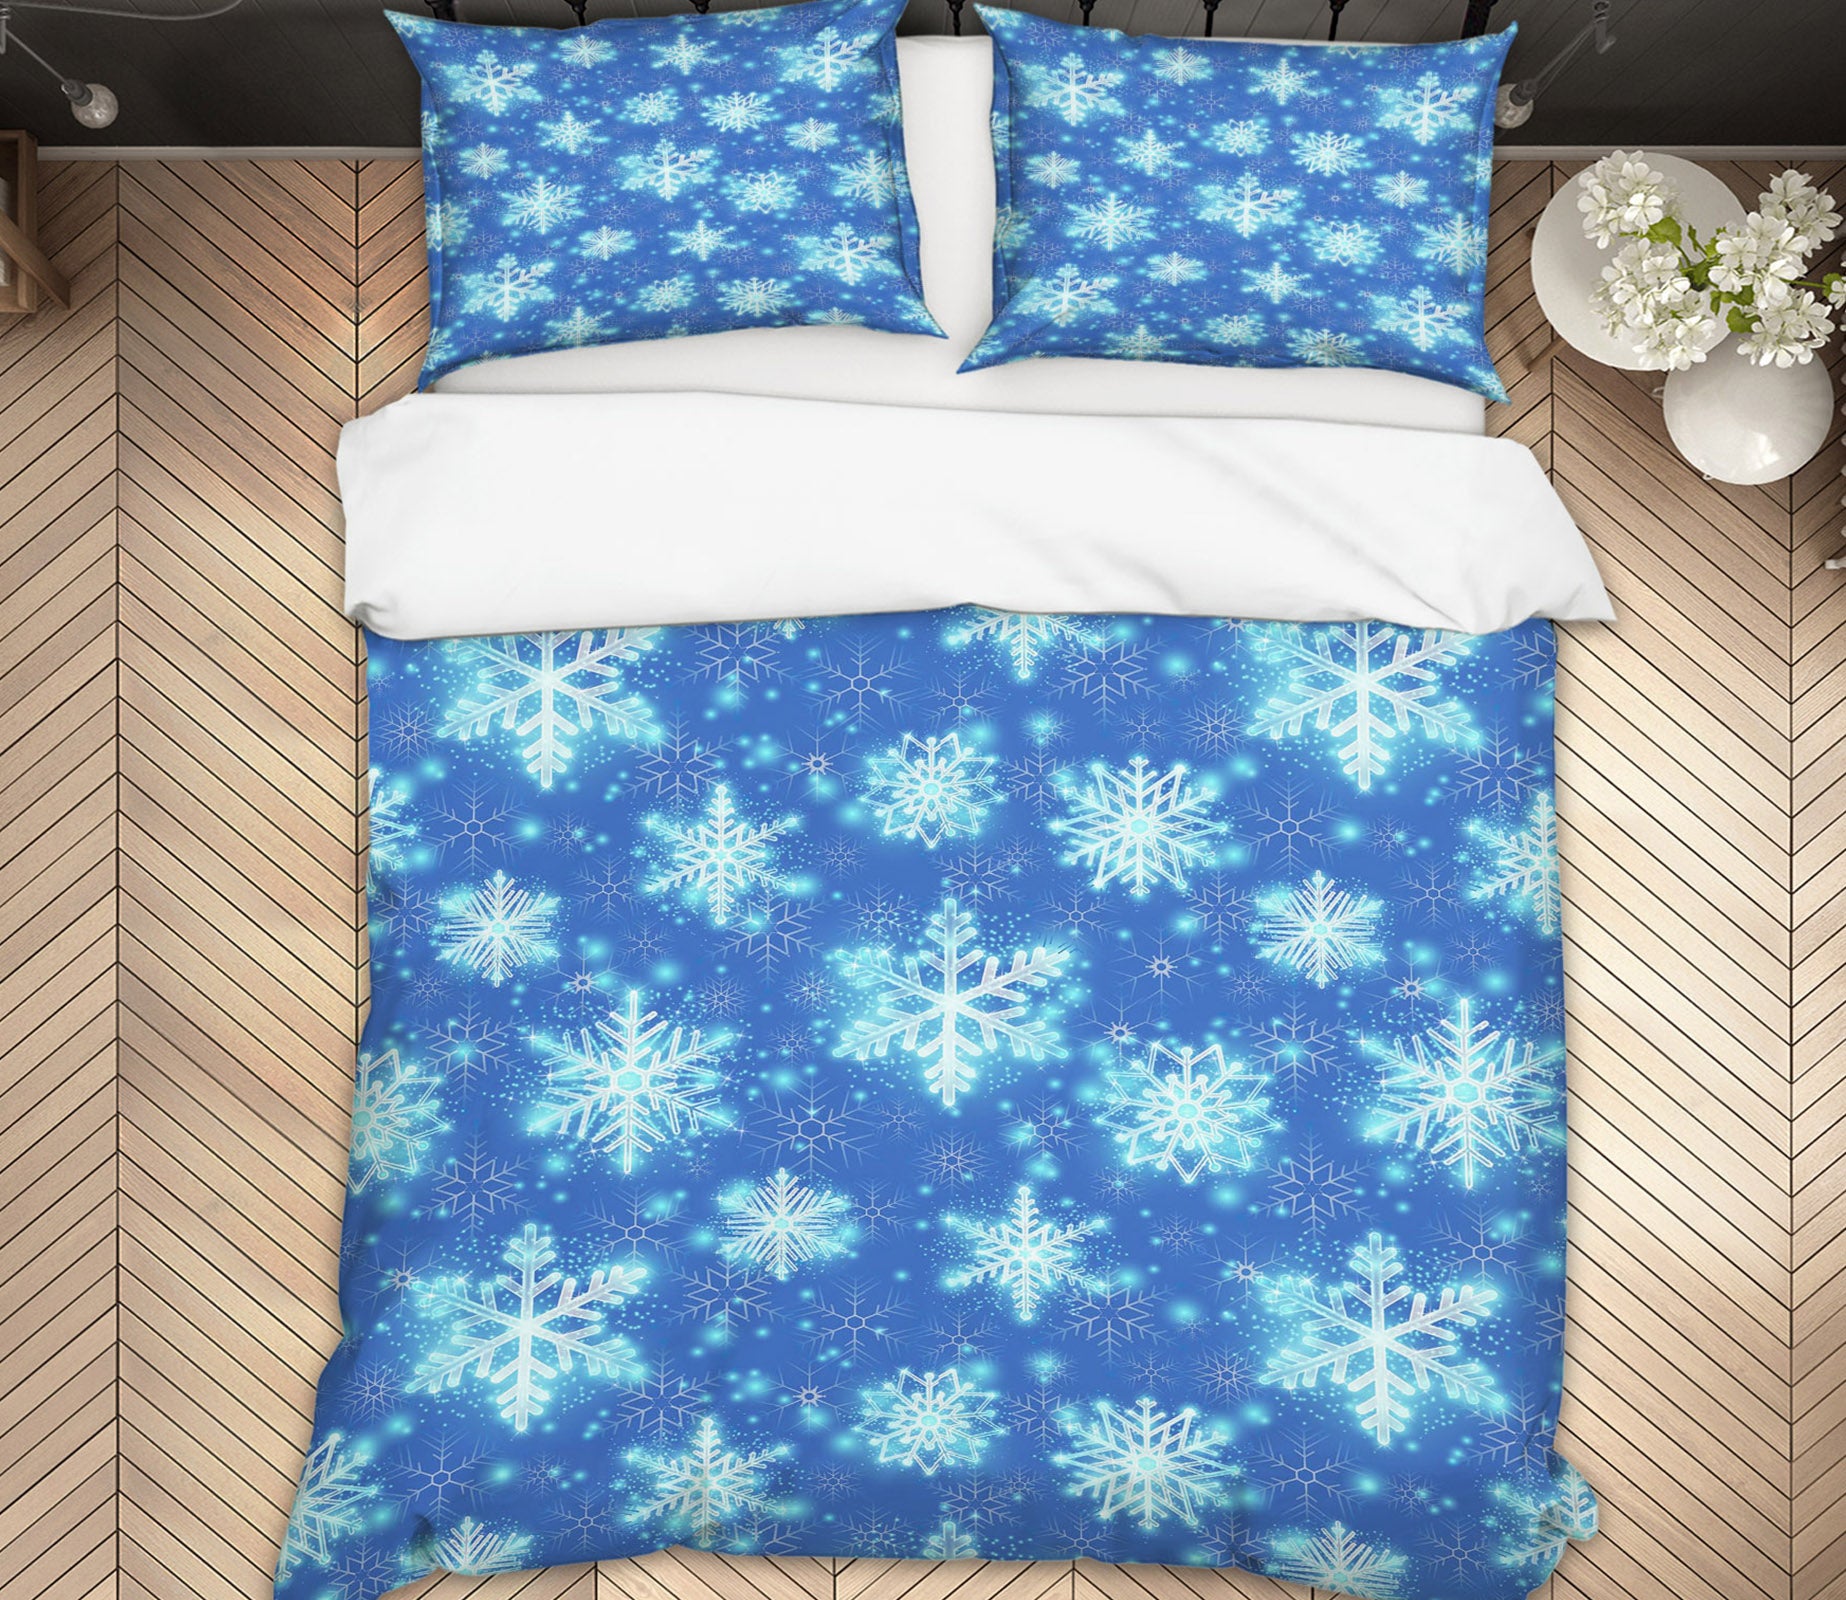 3D Blue Snowflakes 51061 Christmas Quilt Duvet Cover Xmas Bed Pillowcases